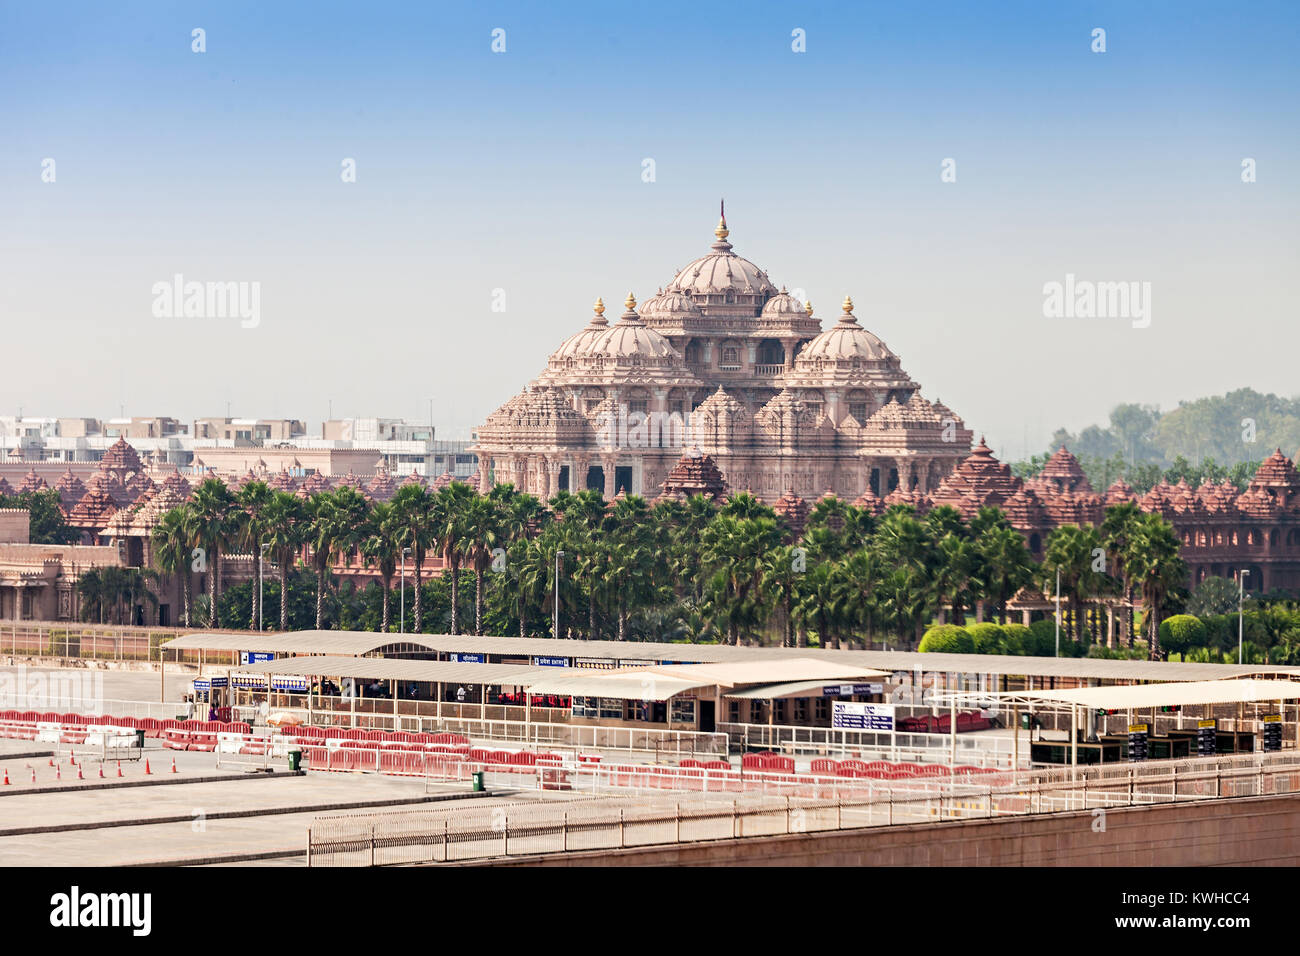 Facade of a temple, Akshardham, Delhi, India Stock Photo